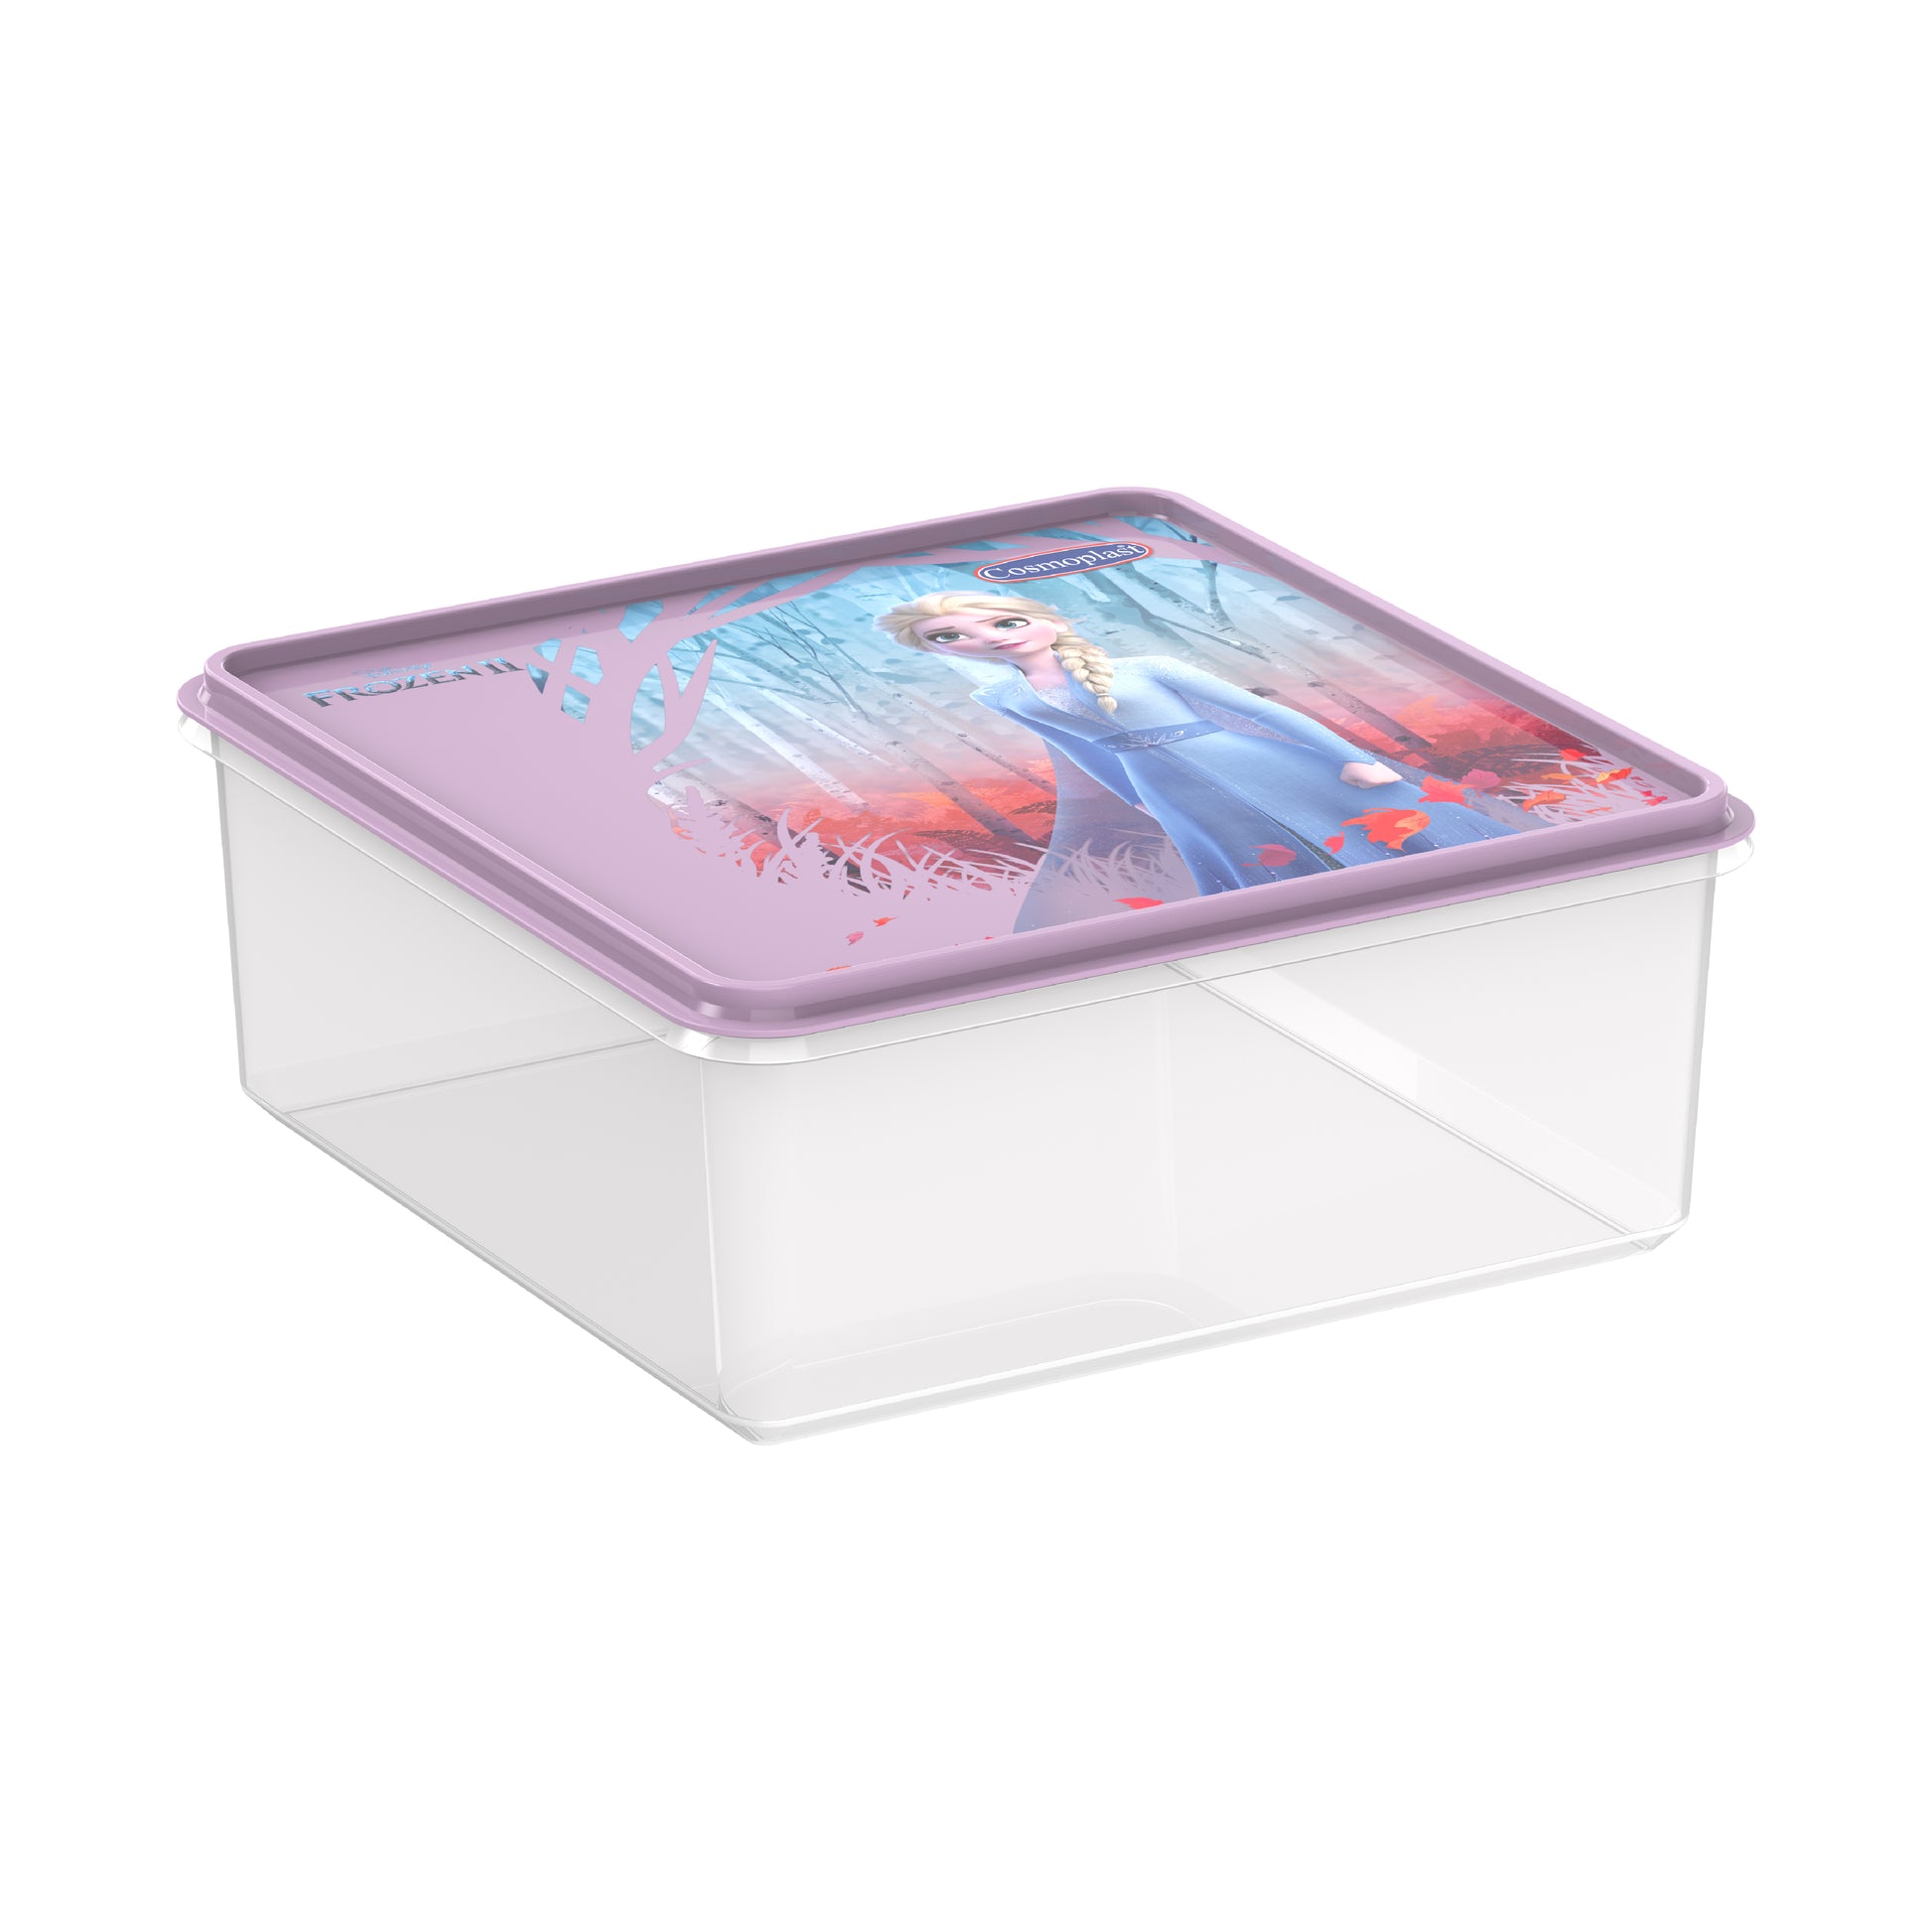 Cosmoplast Disney Frozen Storage Box 8 Liters